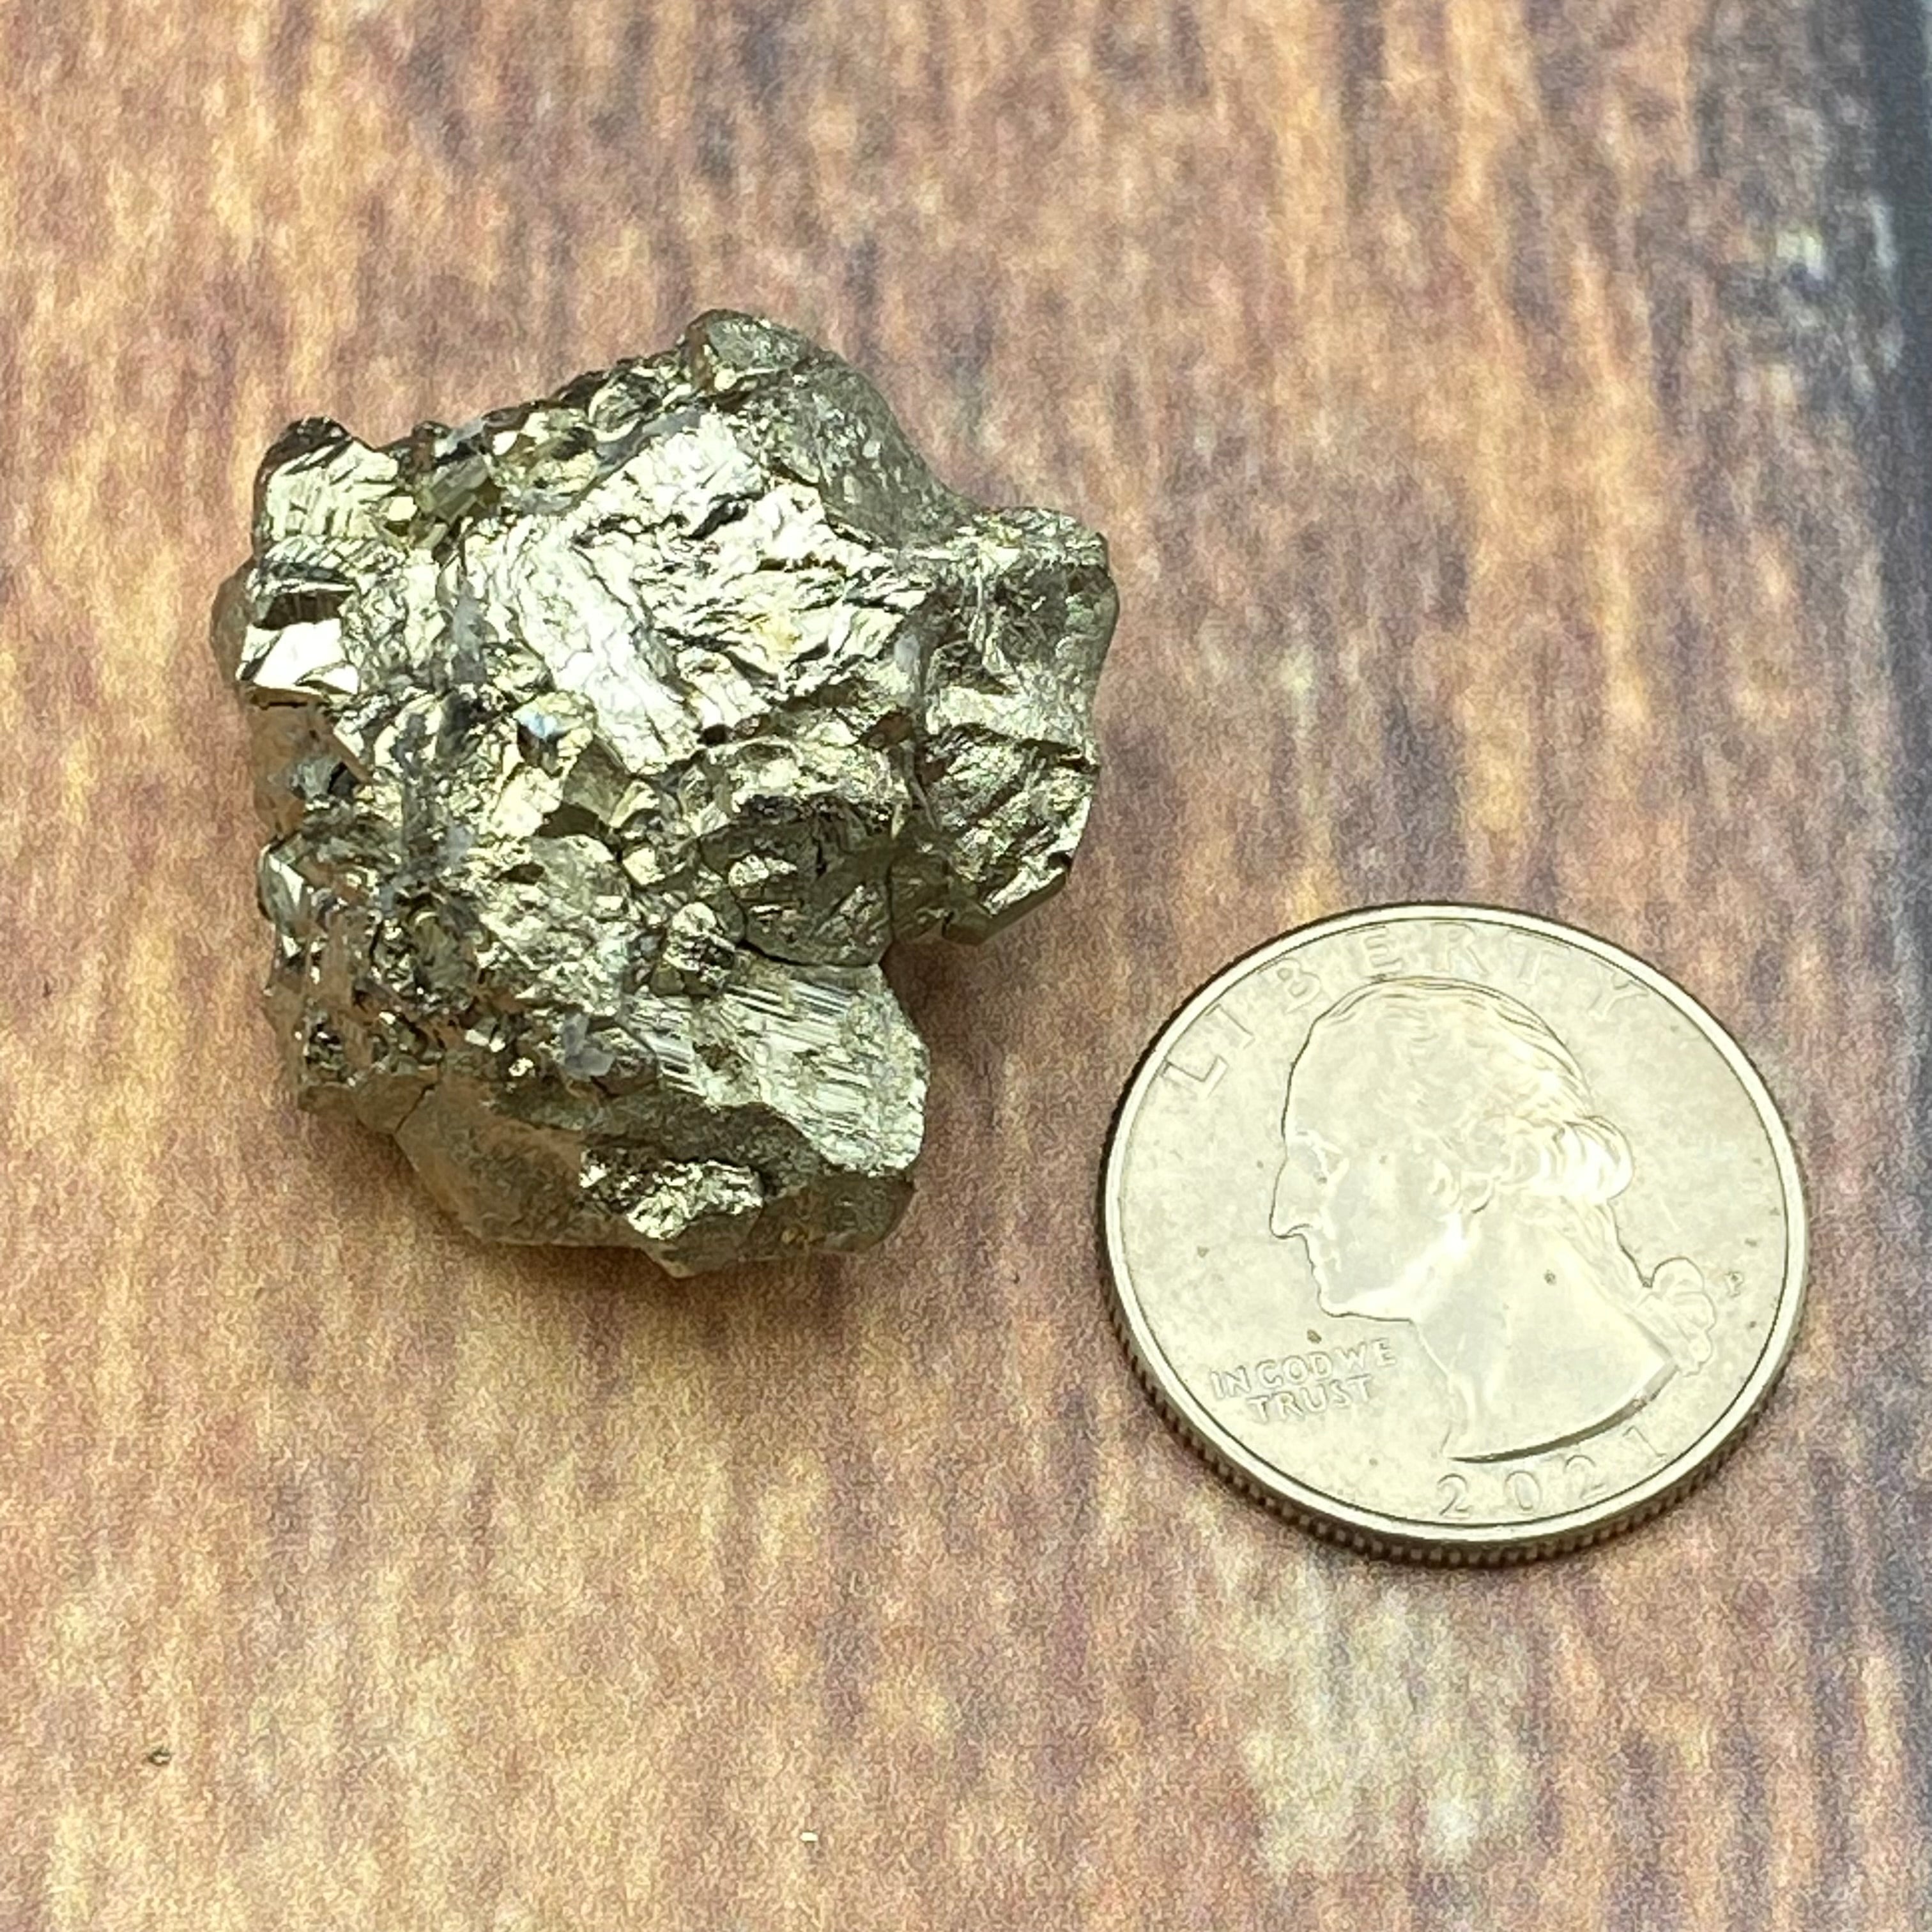 Peruvian Pyrite Crystal - 124